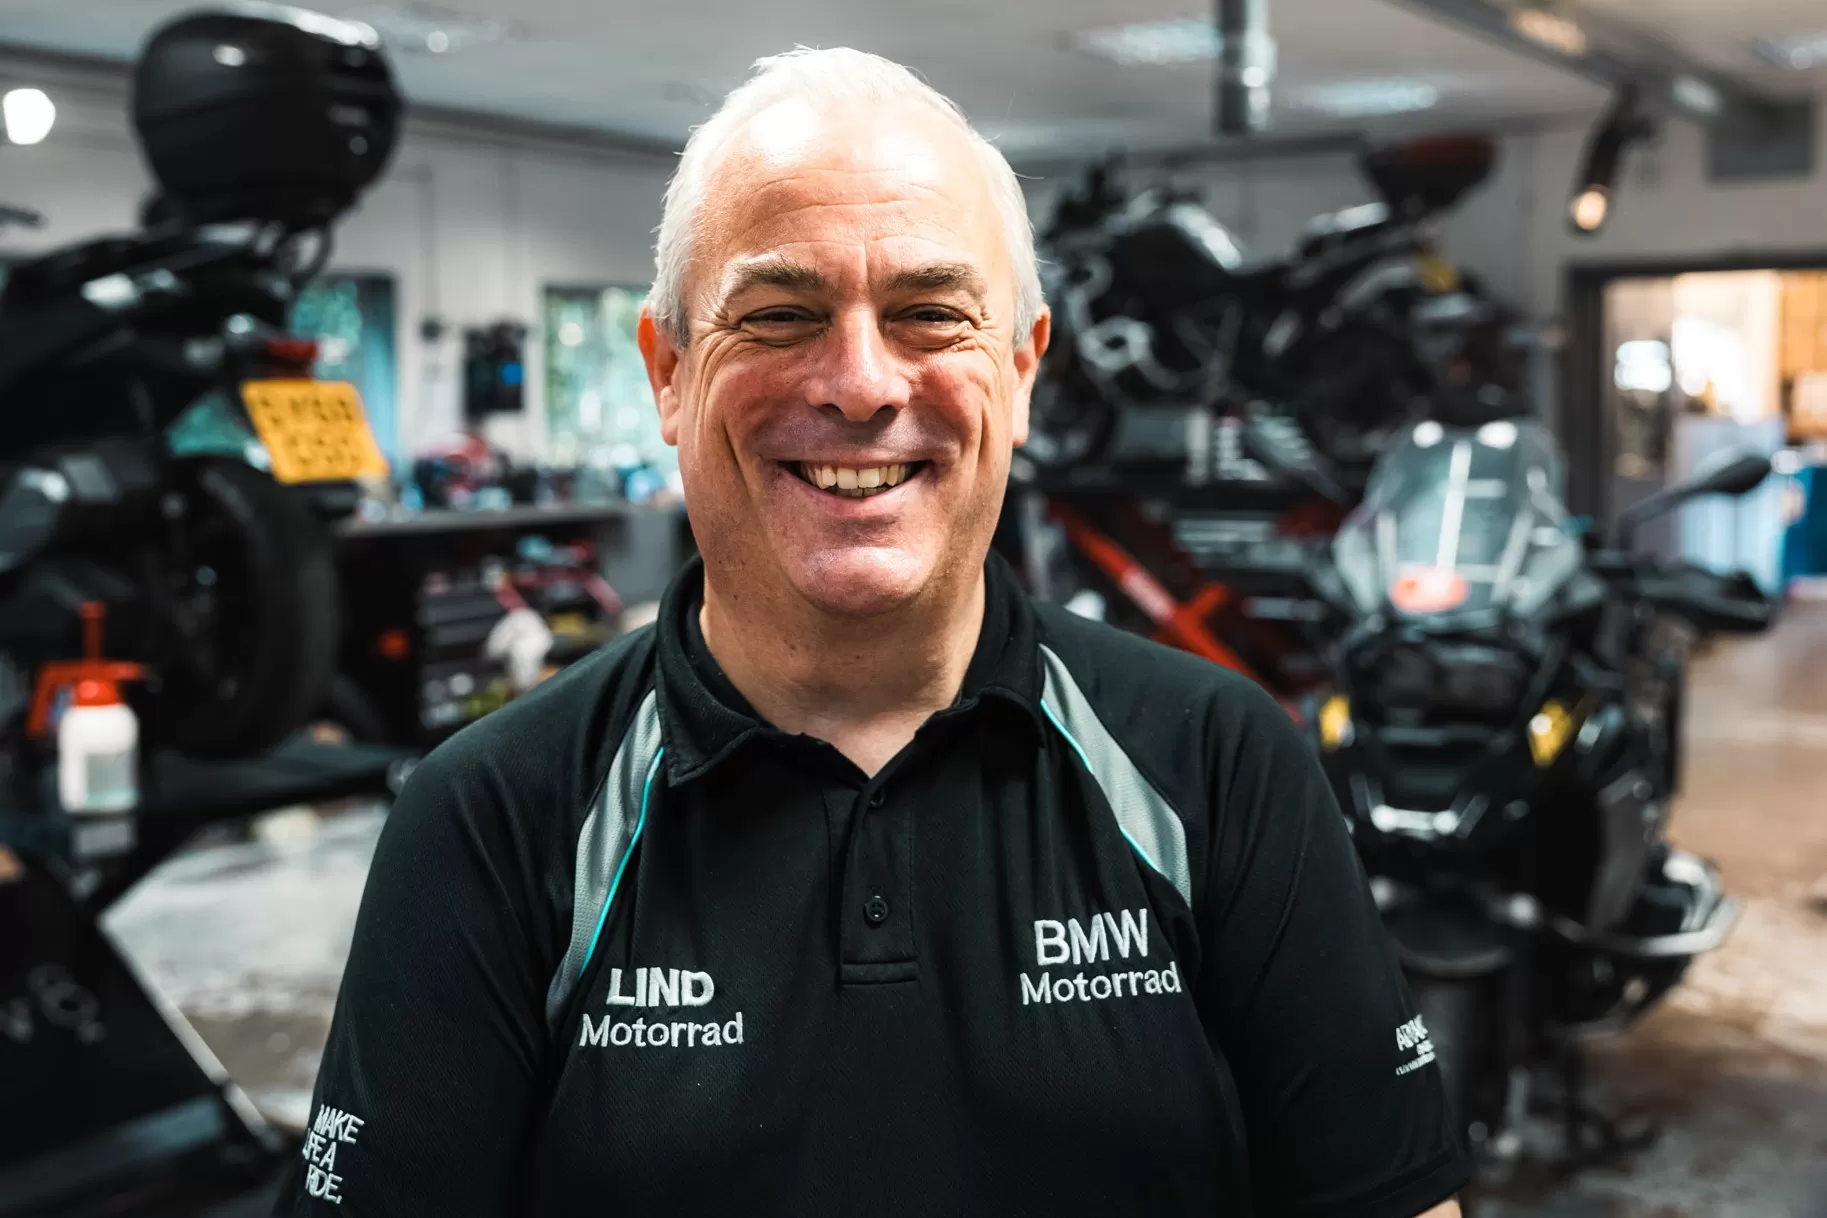 LIND Motorrad Welwyn Garden City Technical Expert